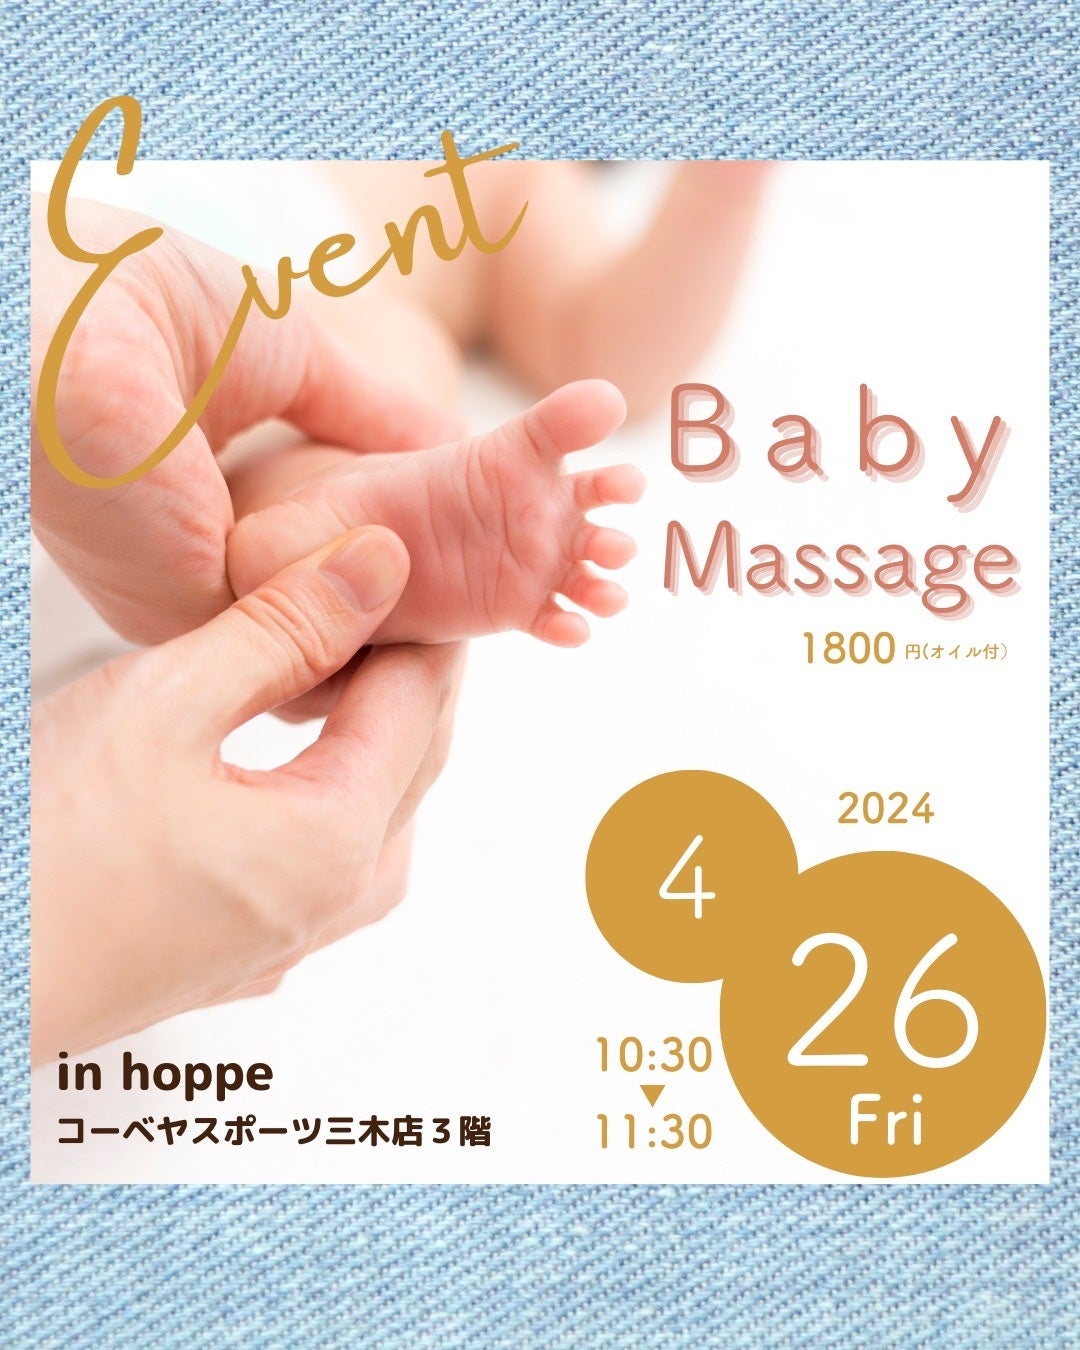 「Baby Massage in hoppe」